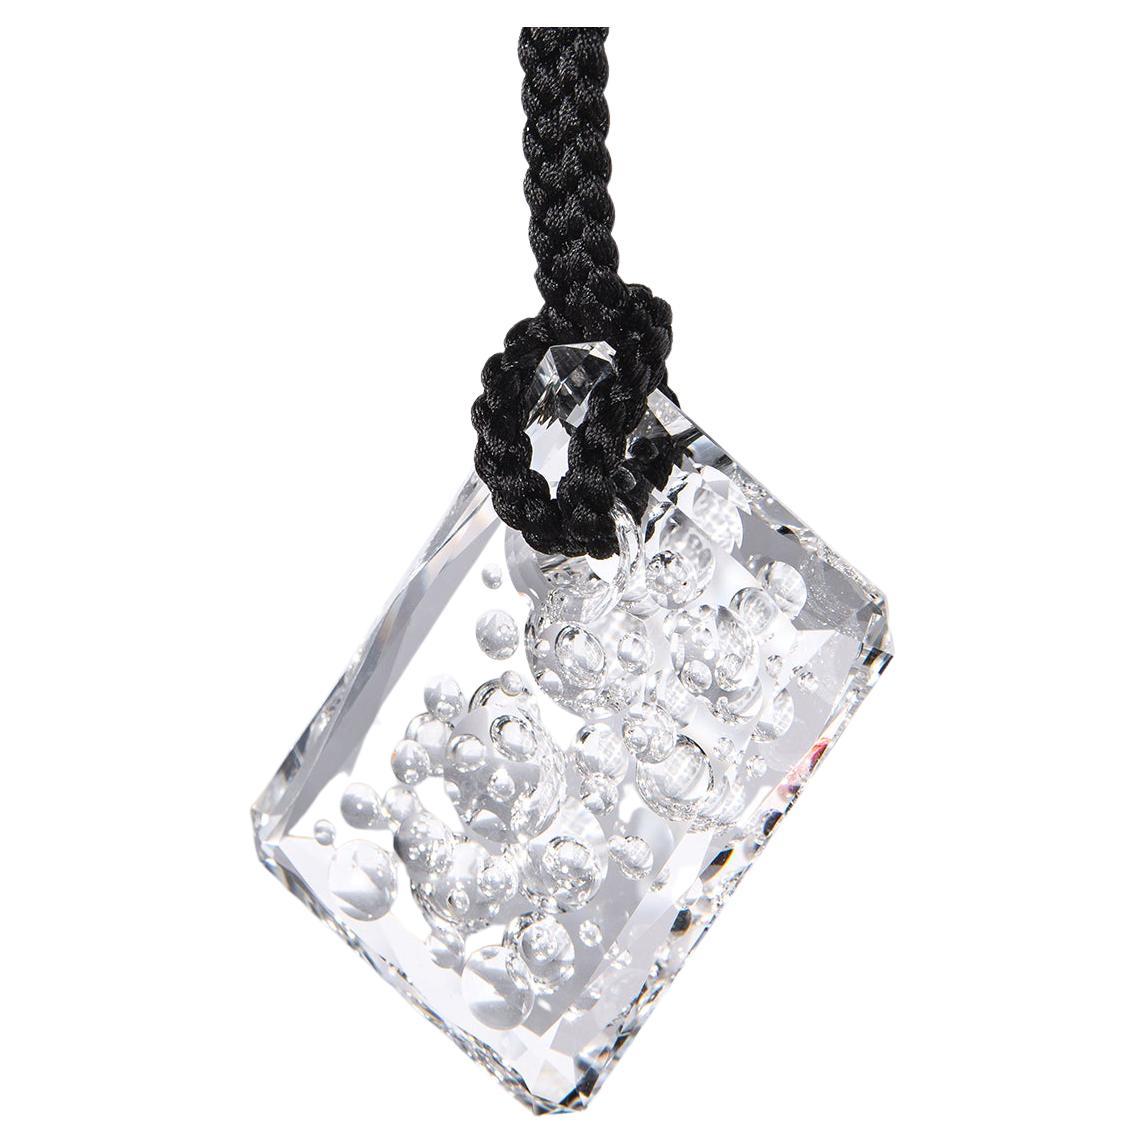 Talisman II Carved Rock Crystal Pendant Unique Amulet pendant healing gemstone For Sale 9